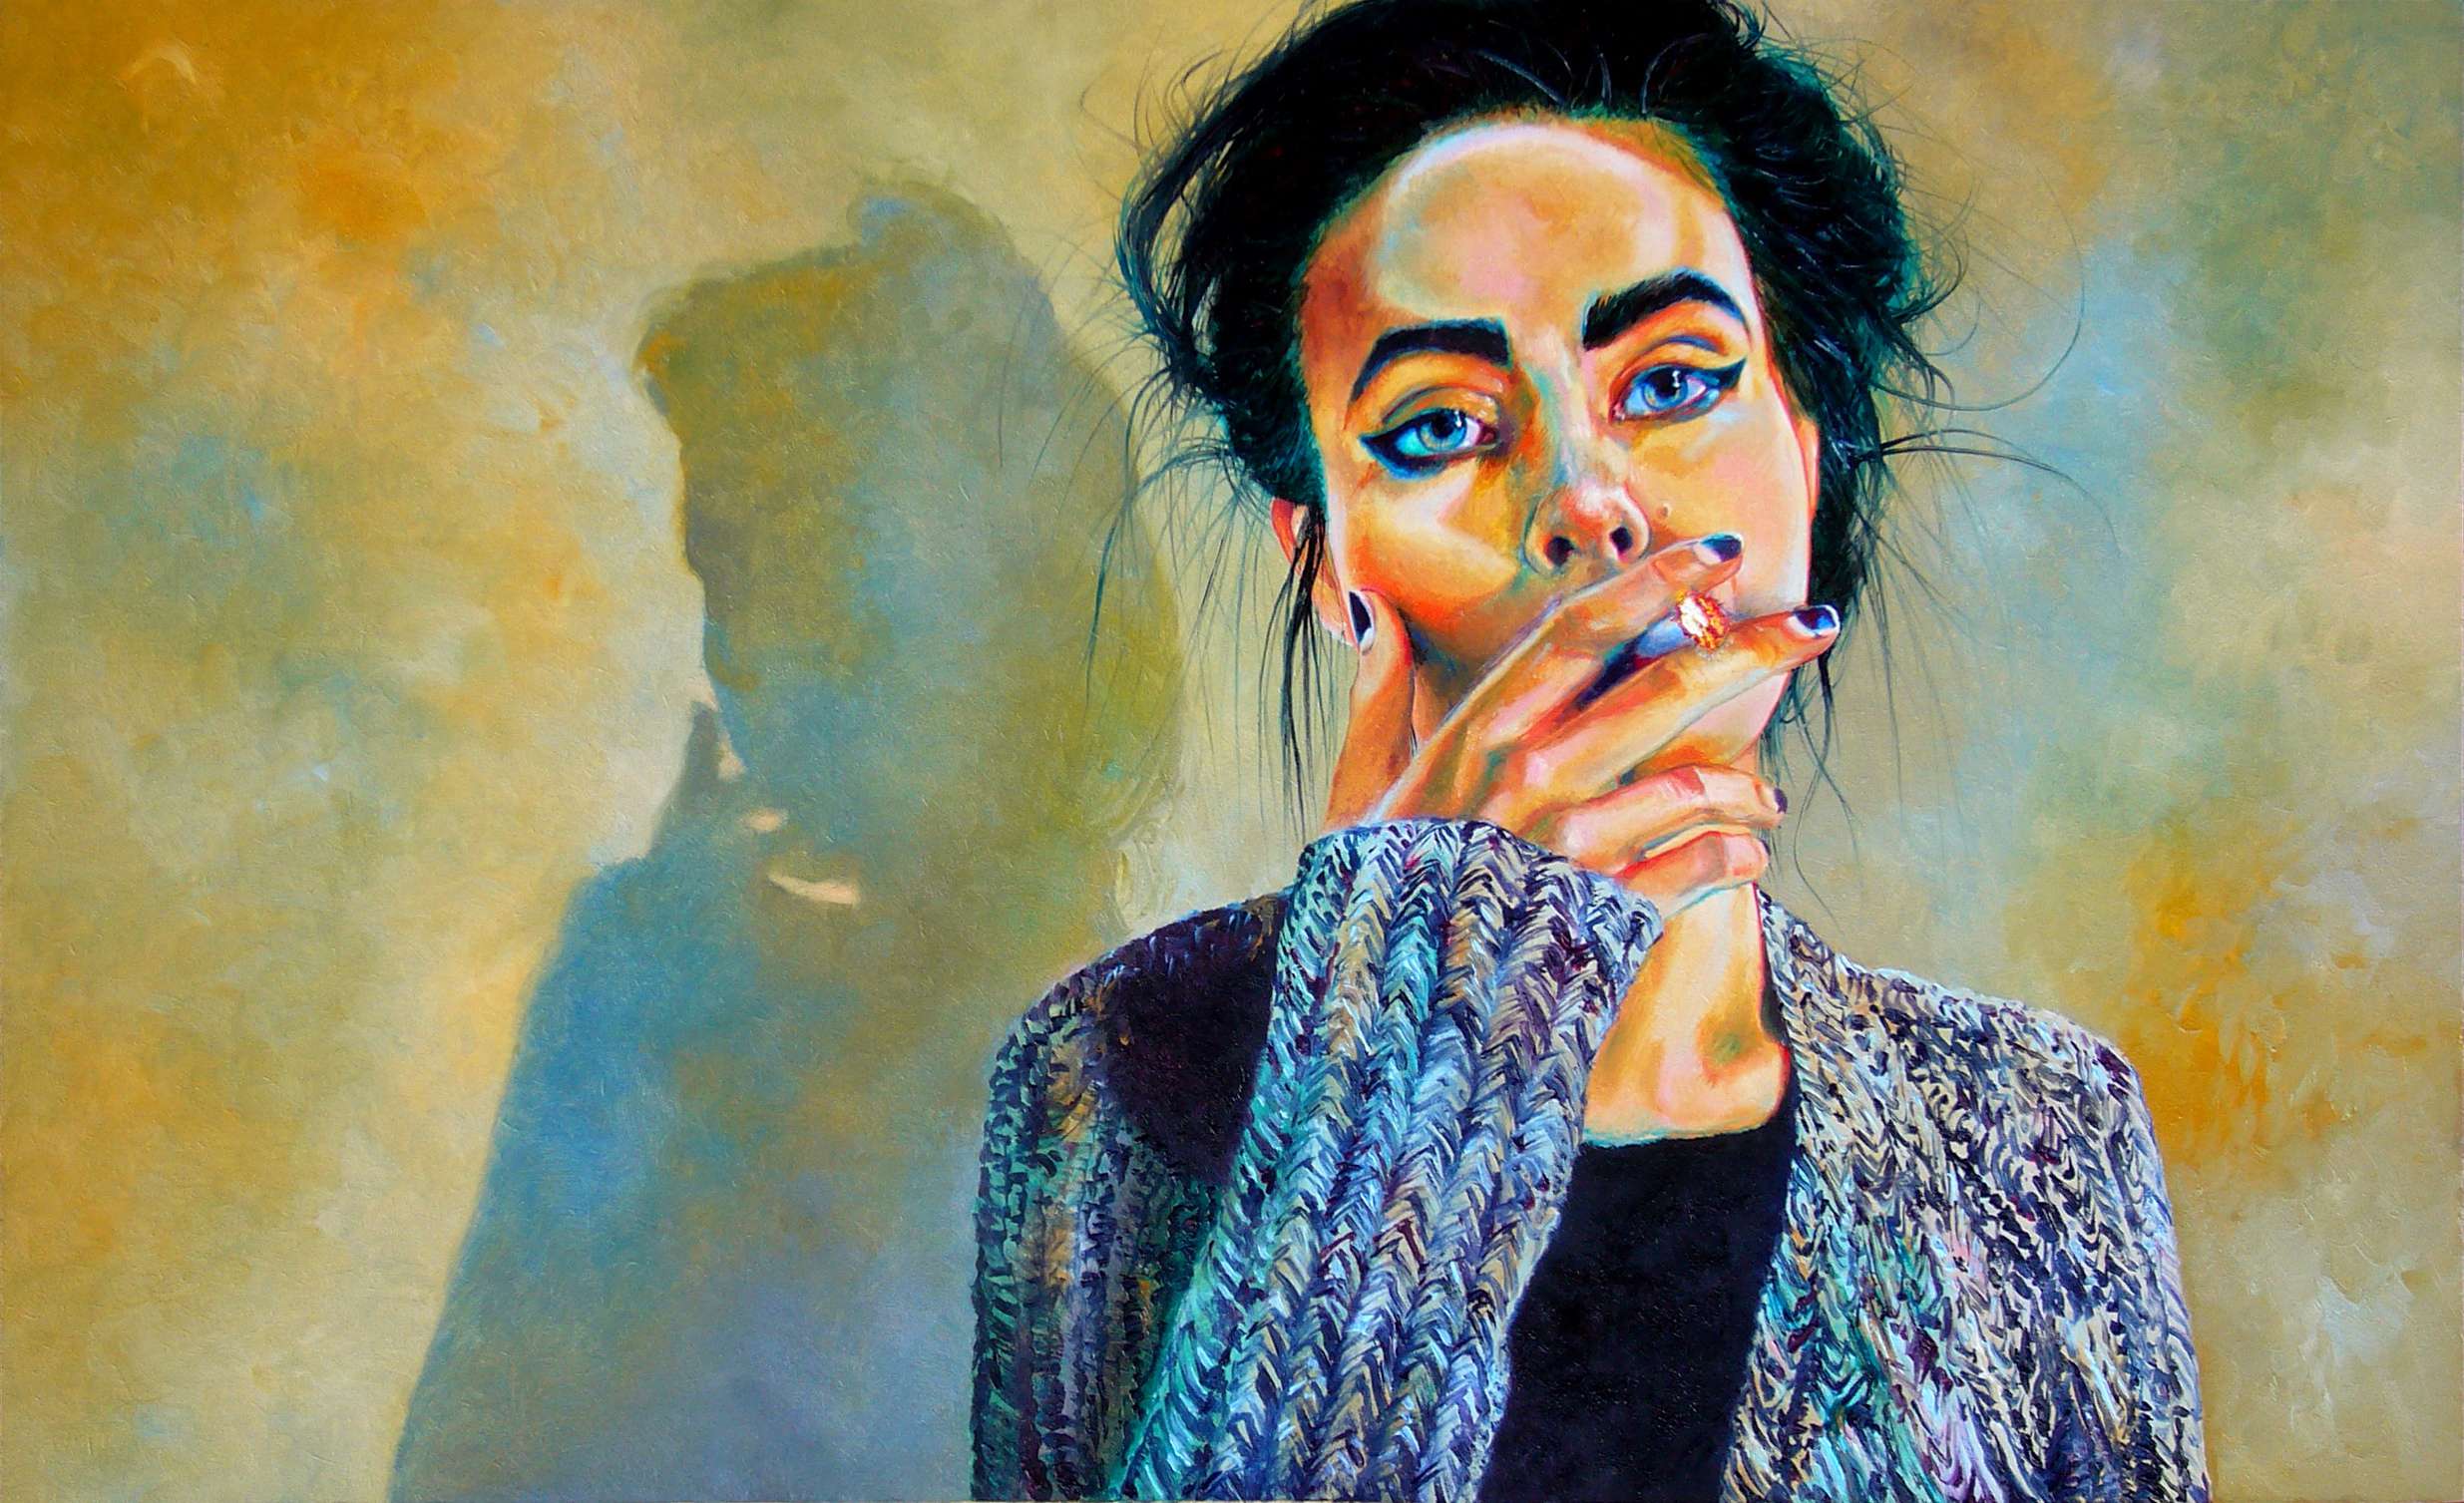 Painting of a Woman by Wlodzimierz Kuklinski